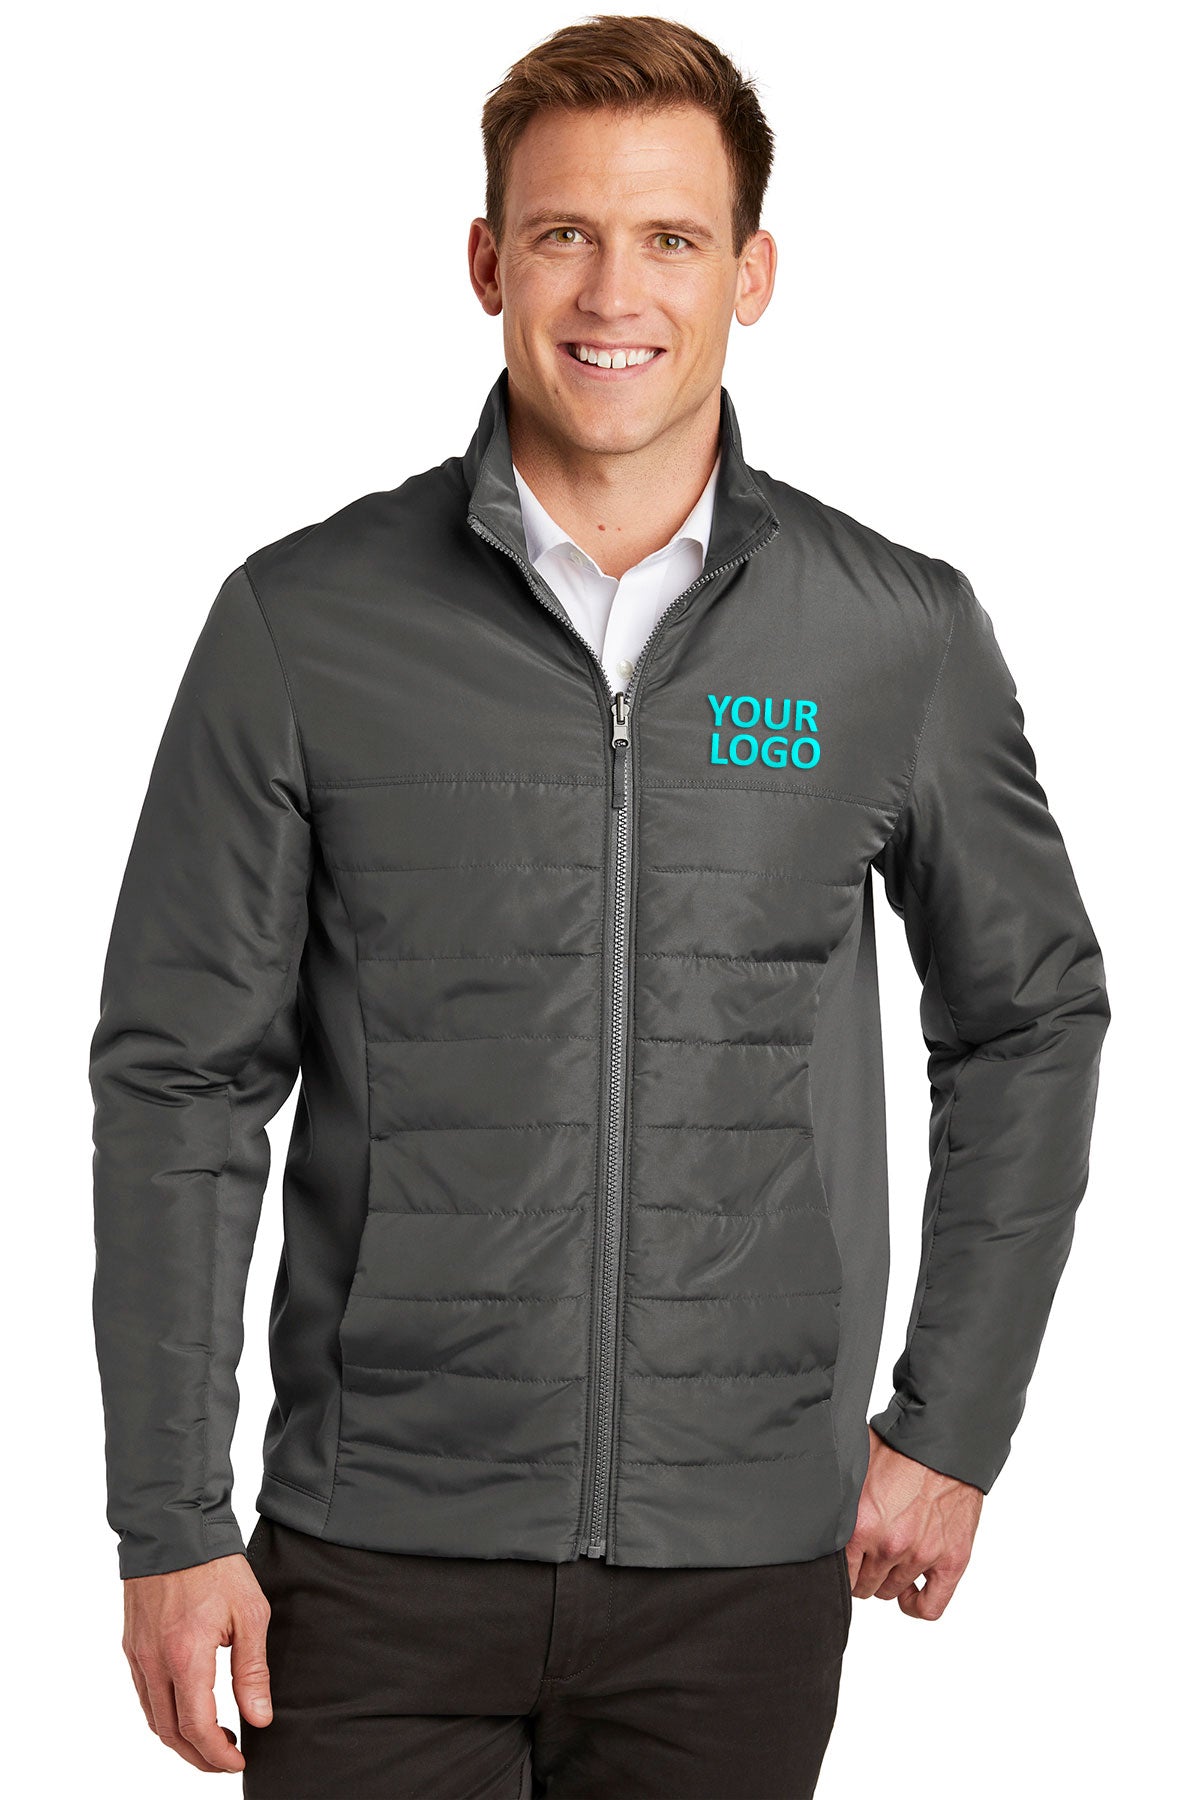 Port Authority Graphite J902 promotional jackets company logo